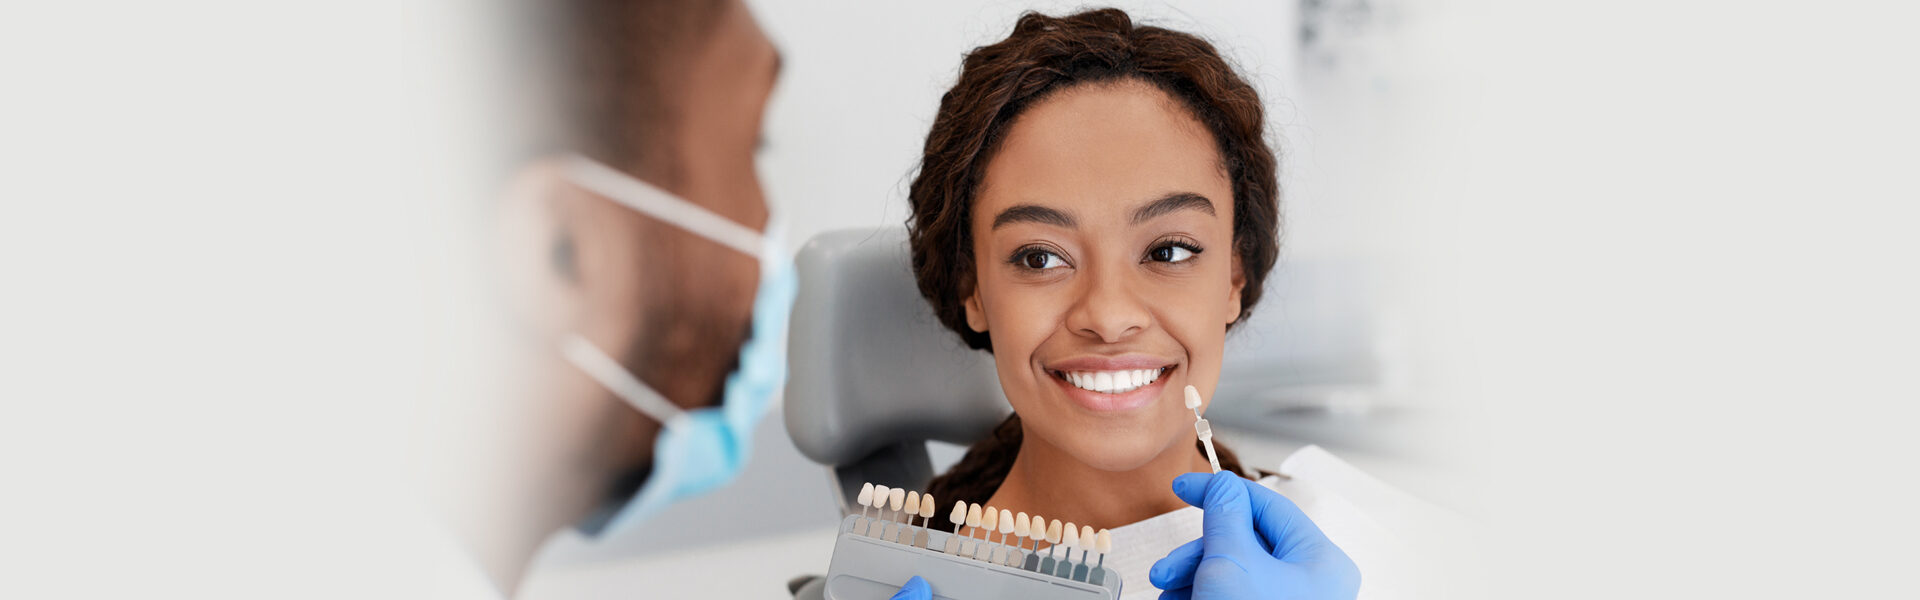 How Can We Remove Veneers from Teeth?